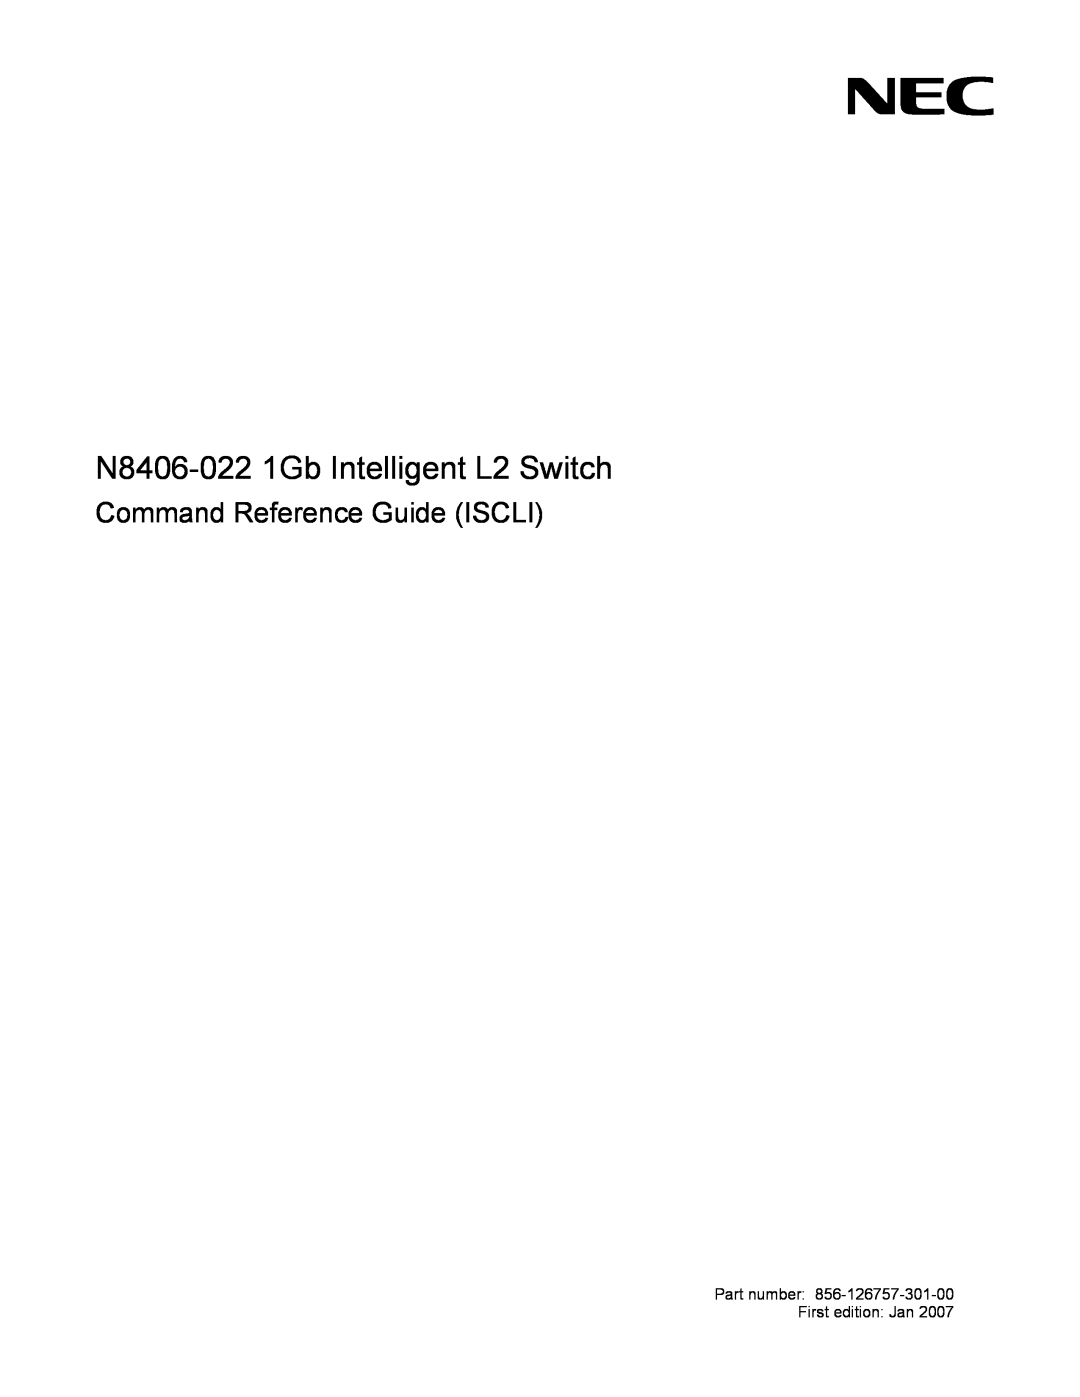 NEC manual 1Gb Intelligent L2 Switch User’s Guide, N8406-022 GbE インテリジェントスイッチL2ユーザーズガイド, 2007 年 1 月第１版 